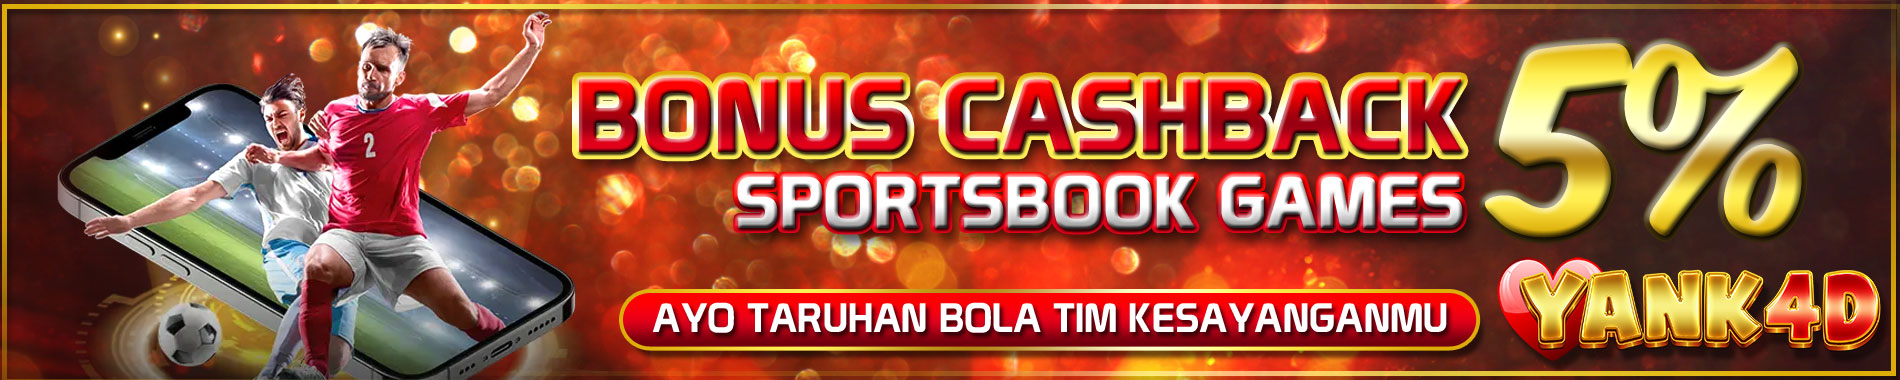 Bonus Cashback Sportsbook